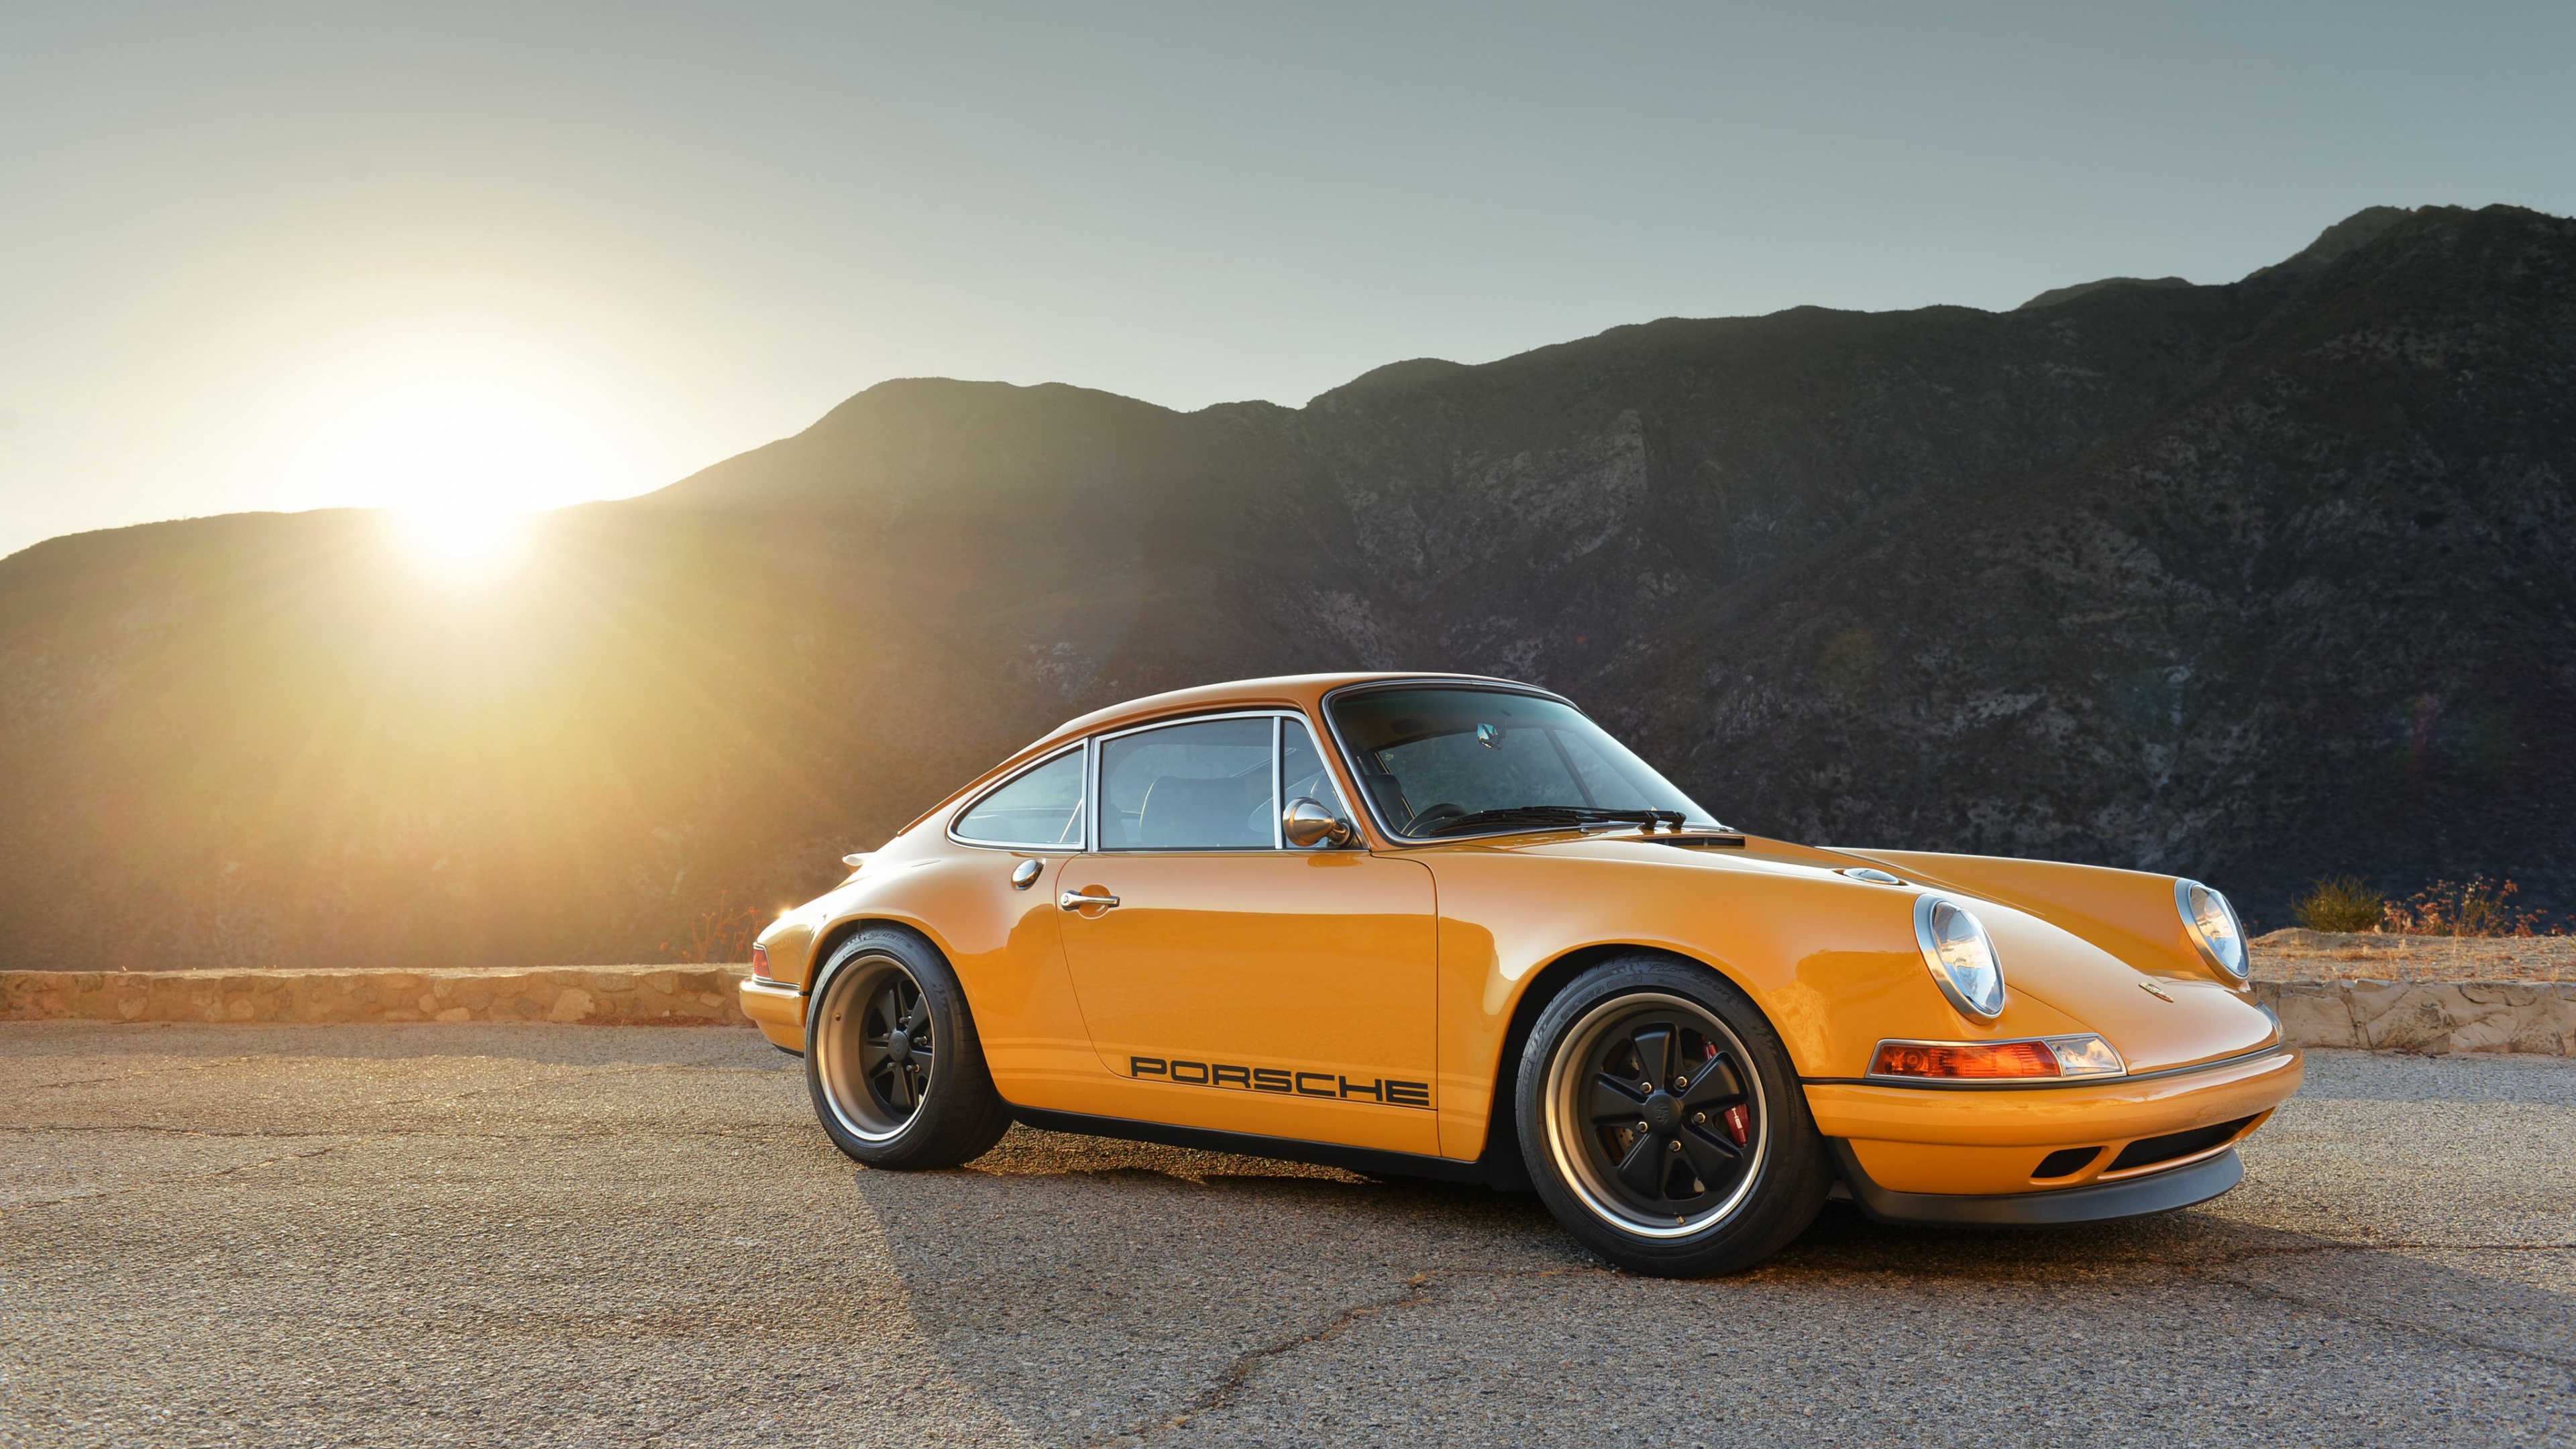 Yellow Porsche 911 on Brown Dirt Road During Daytime. Wallpaper in 3840x2160 Resolution